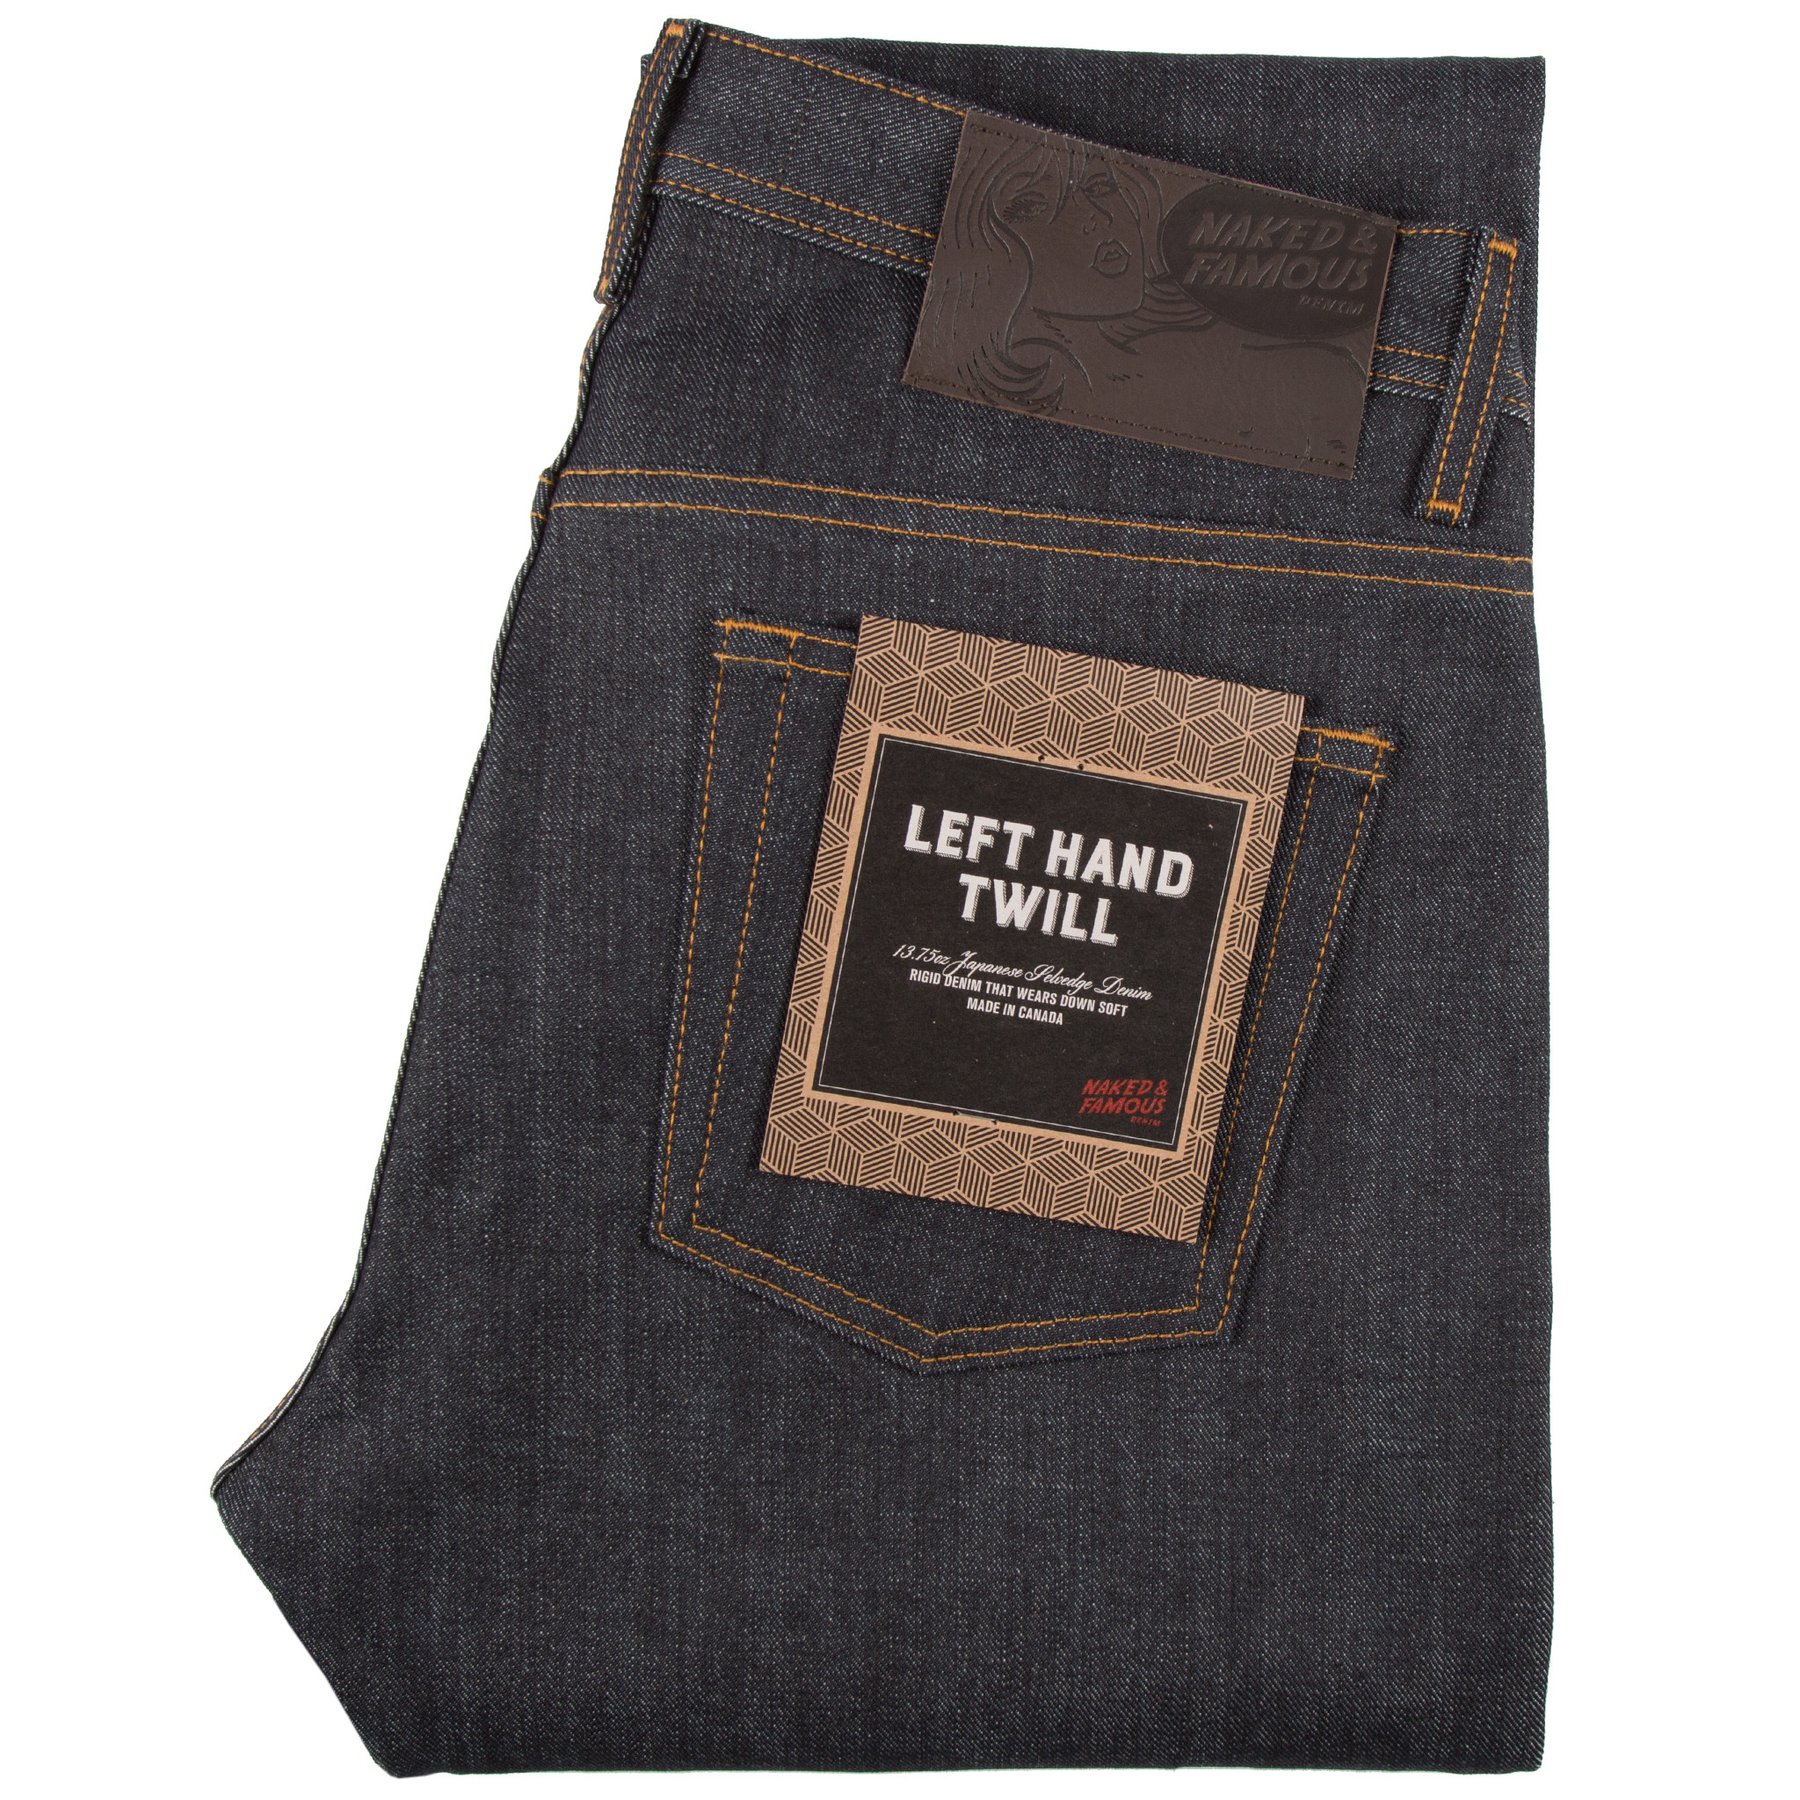  Left Hand Twill Selvedge Jeans Folded 